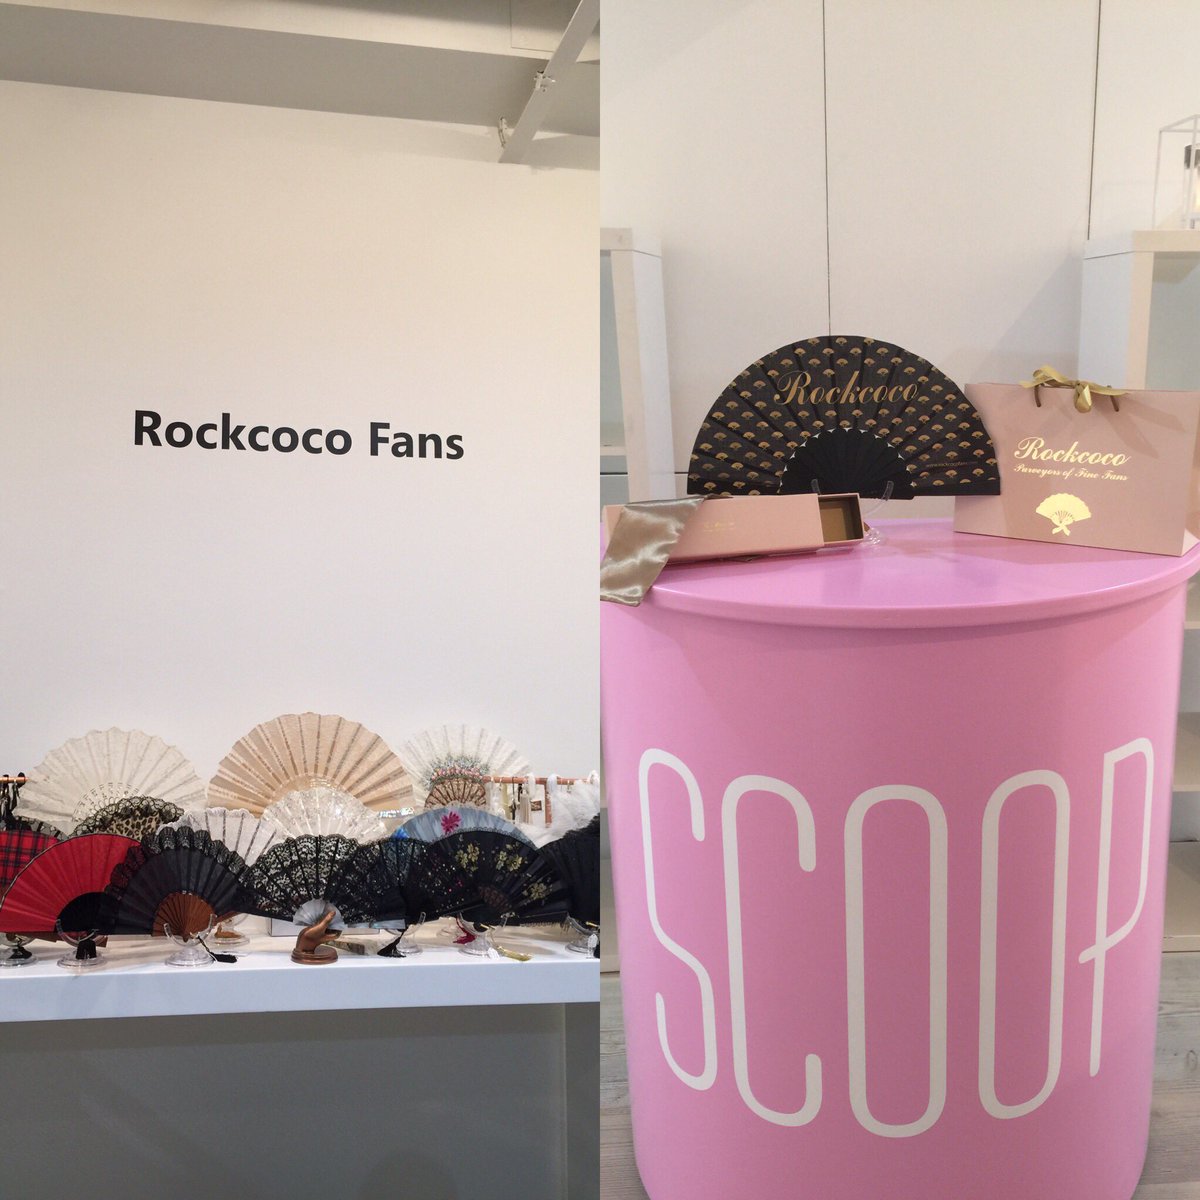 Rockcoco Fans@ #scoopinthesummer #saatchigallery #Chelsea #handfan #abanicos #eventail #rockcocofans #luxuryfashion